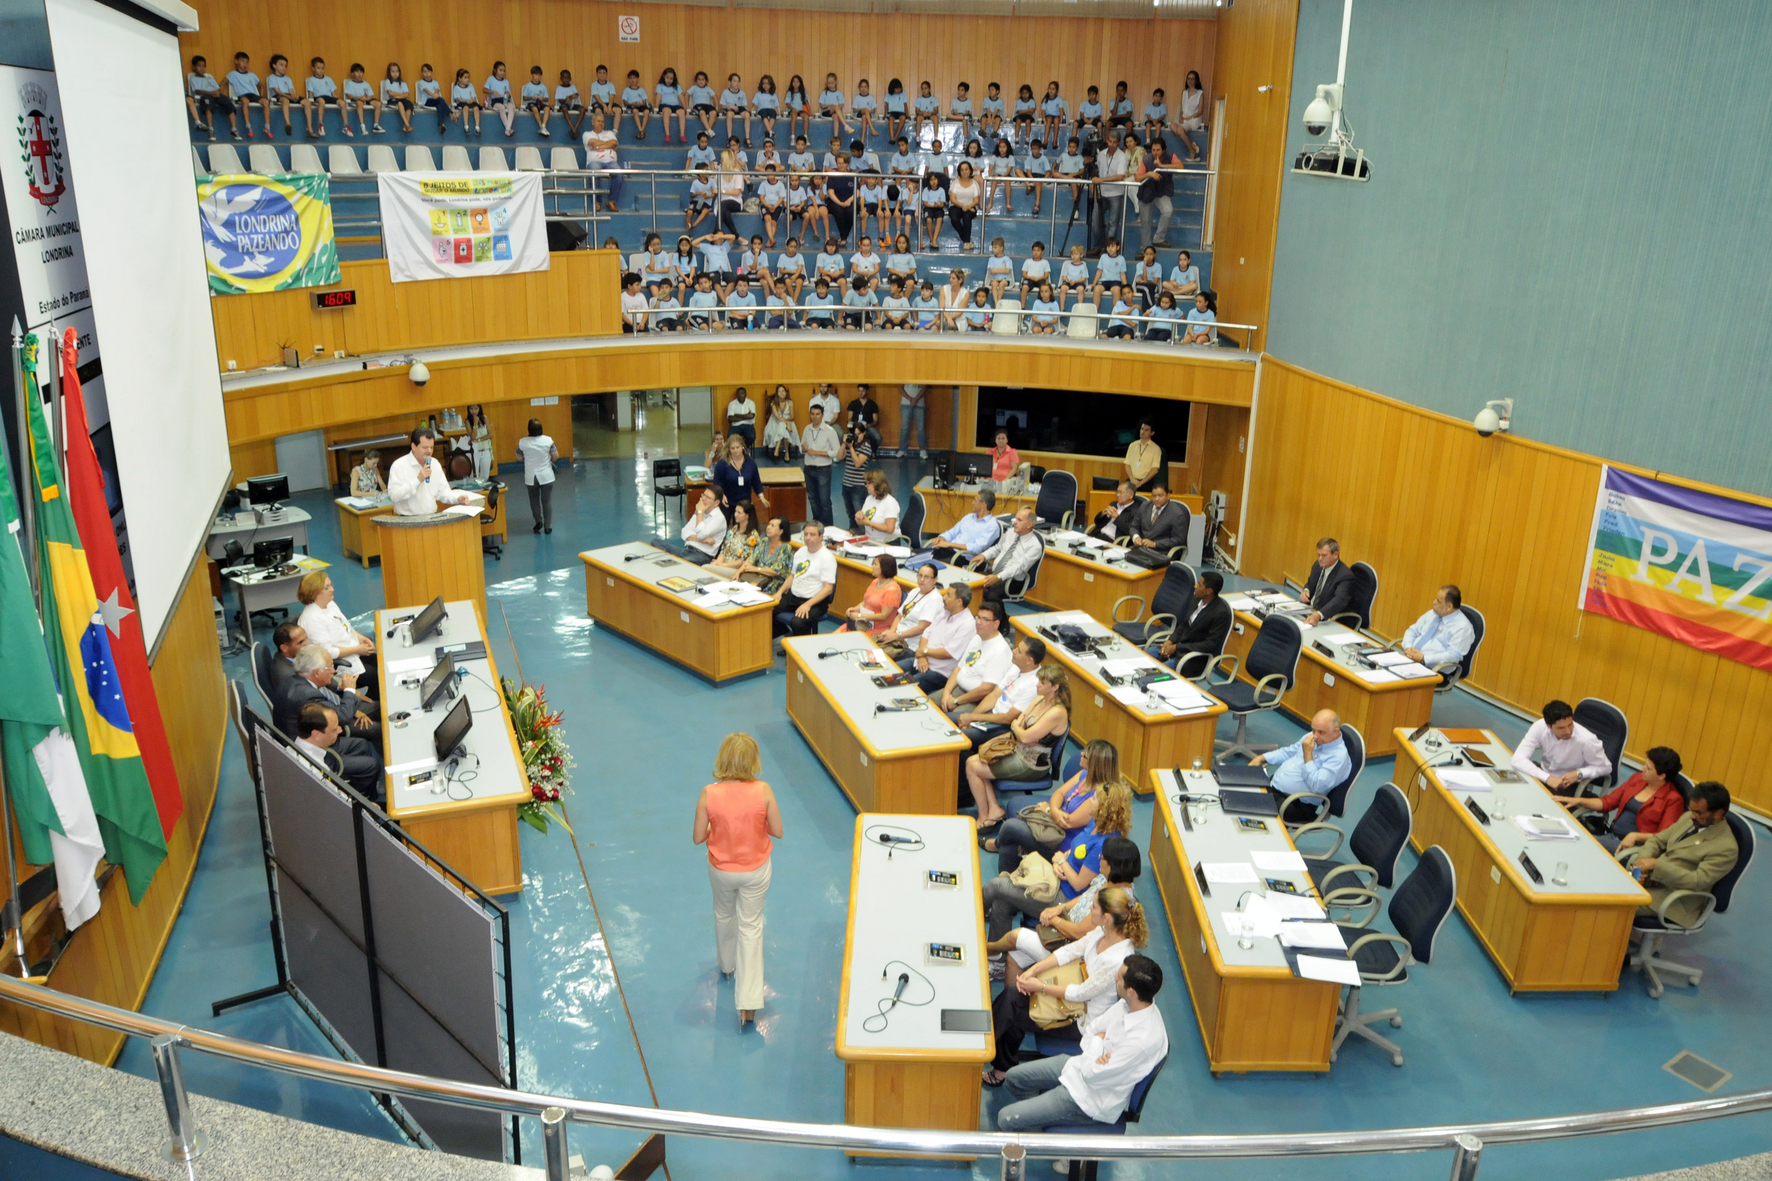 Câmara Municipal de Londrina